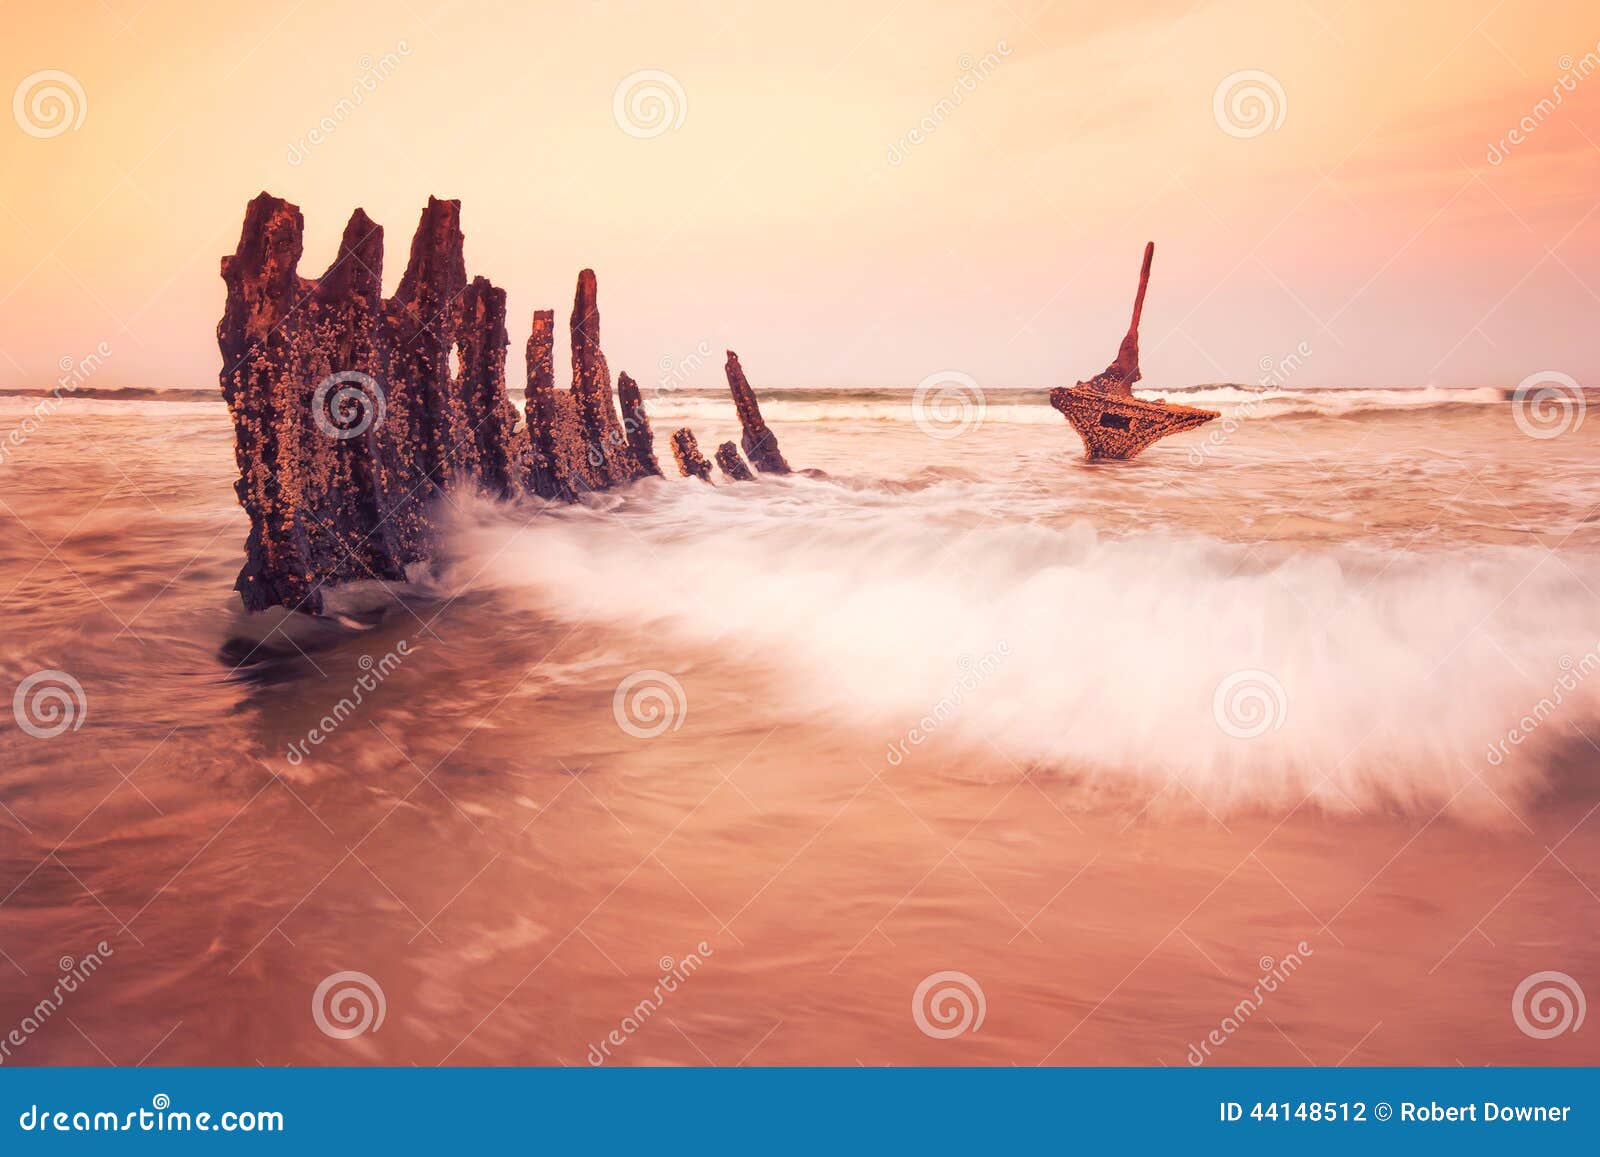 s.s dicky shipwreck